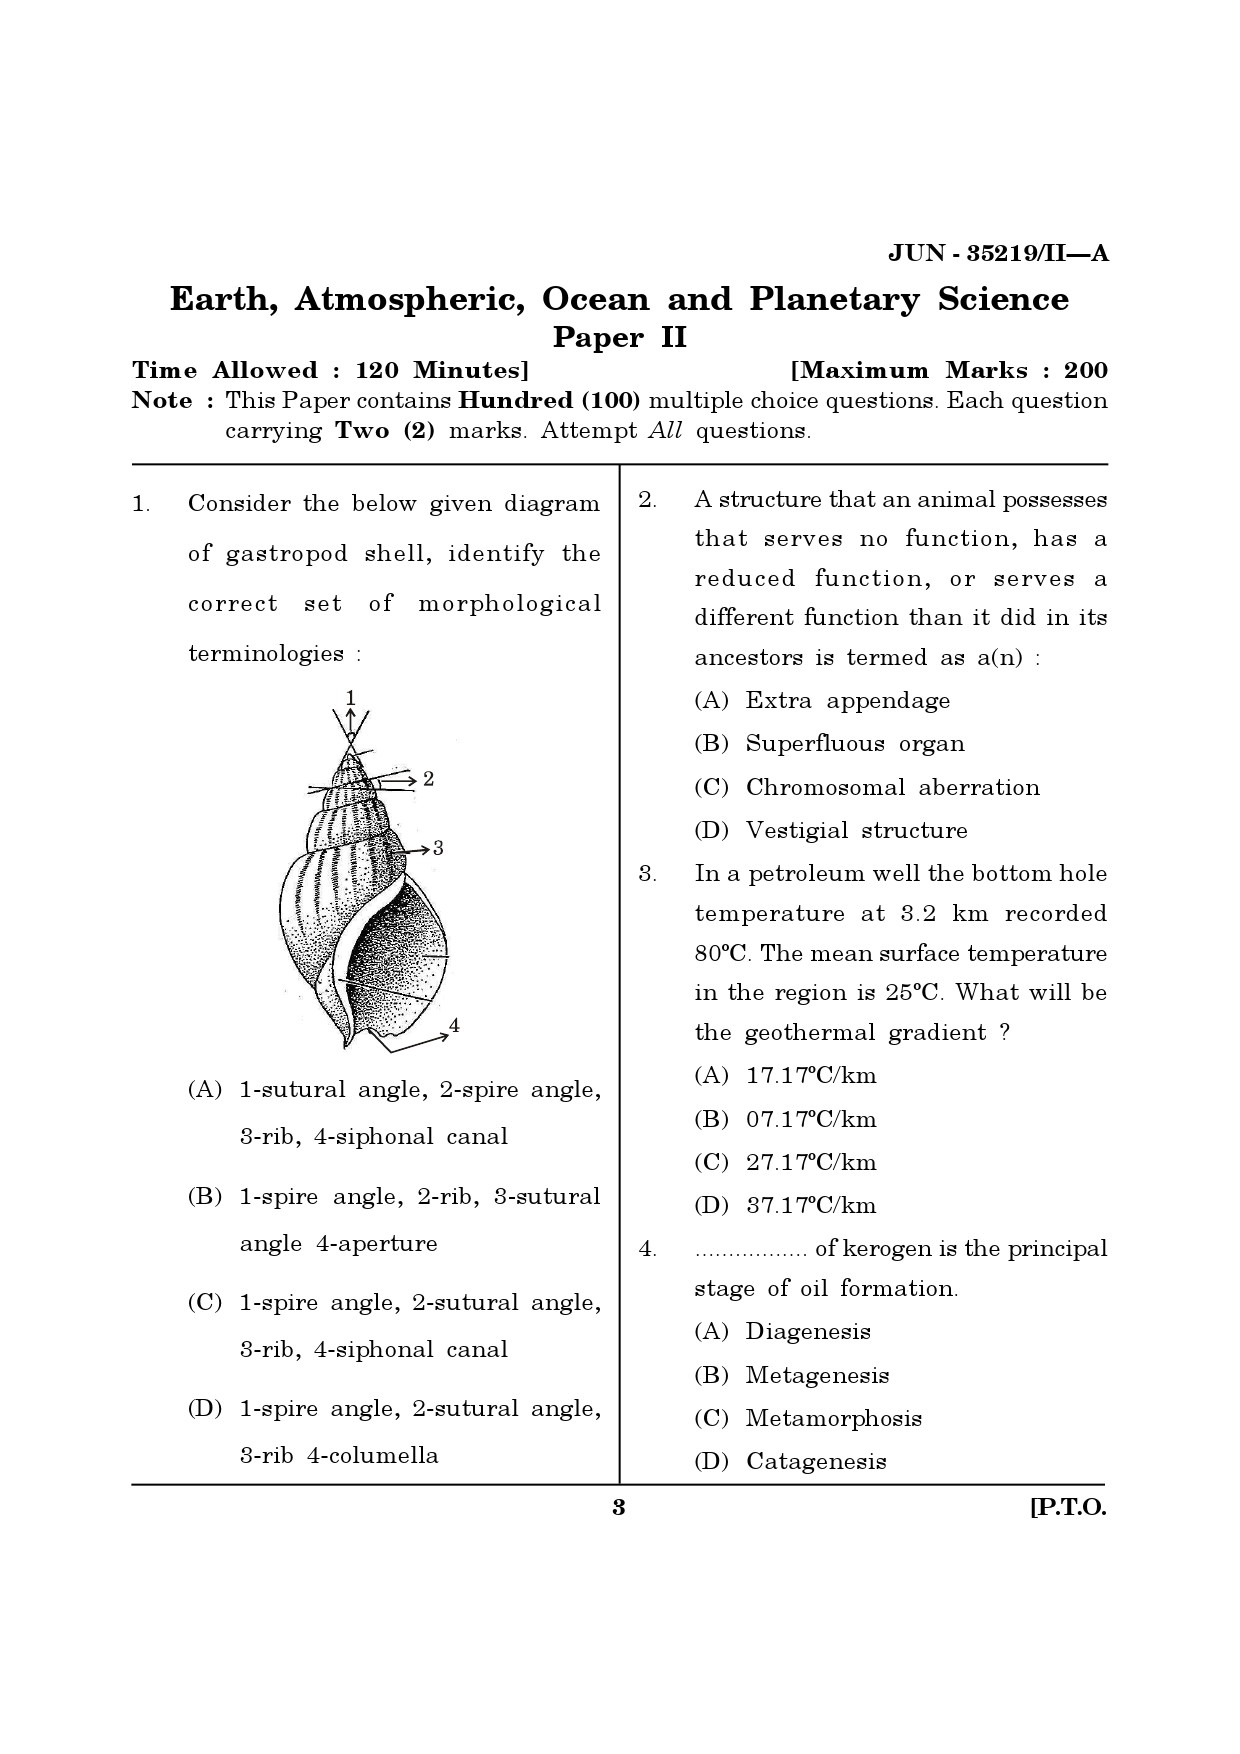 Maharashtra SET Earth Atmospheric Ocean Planetary Science Question Paper II June 2019 2